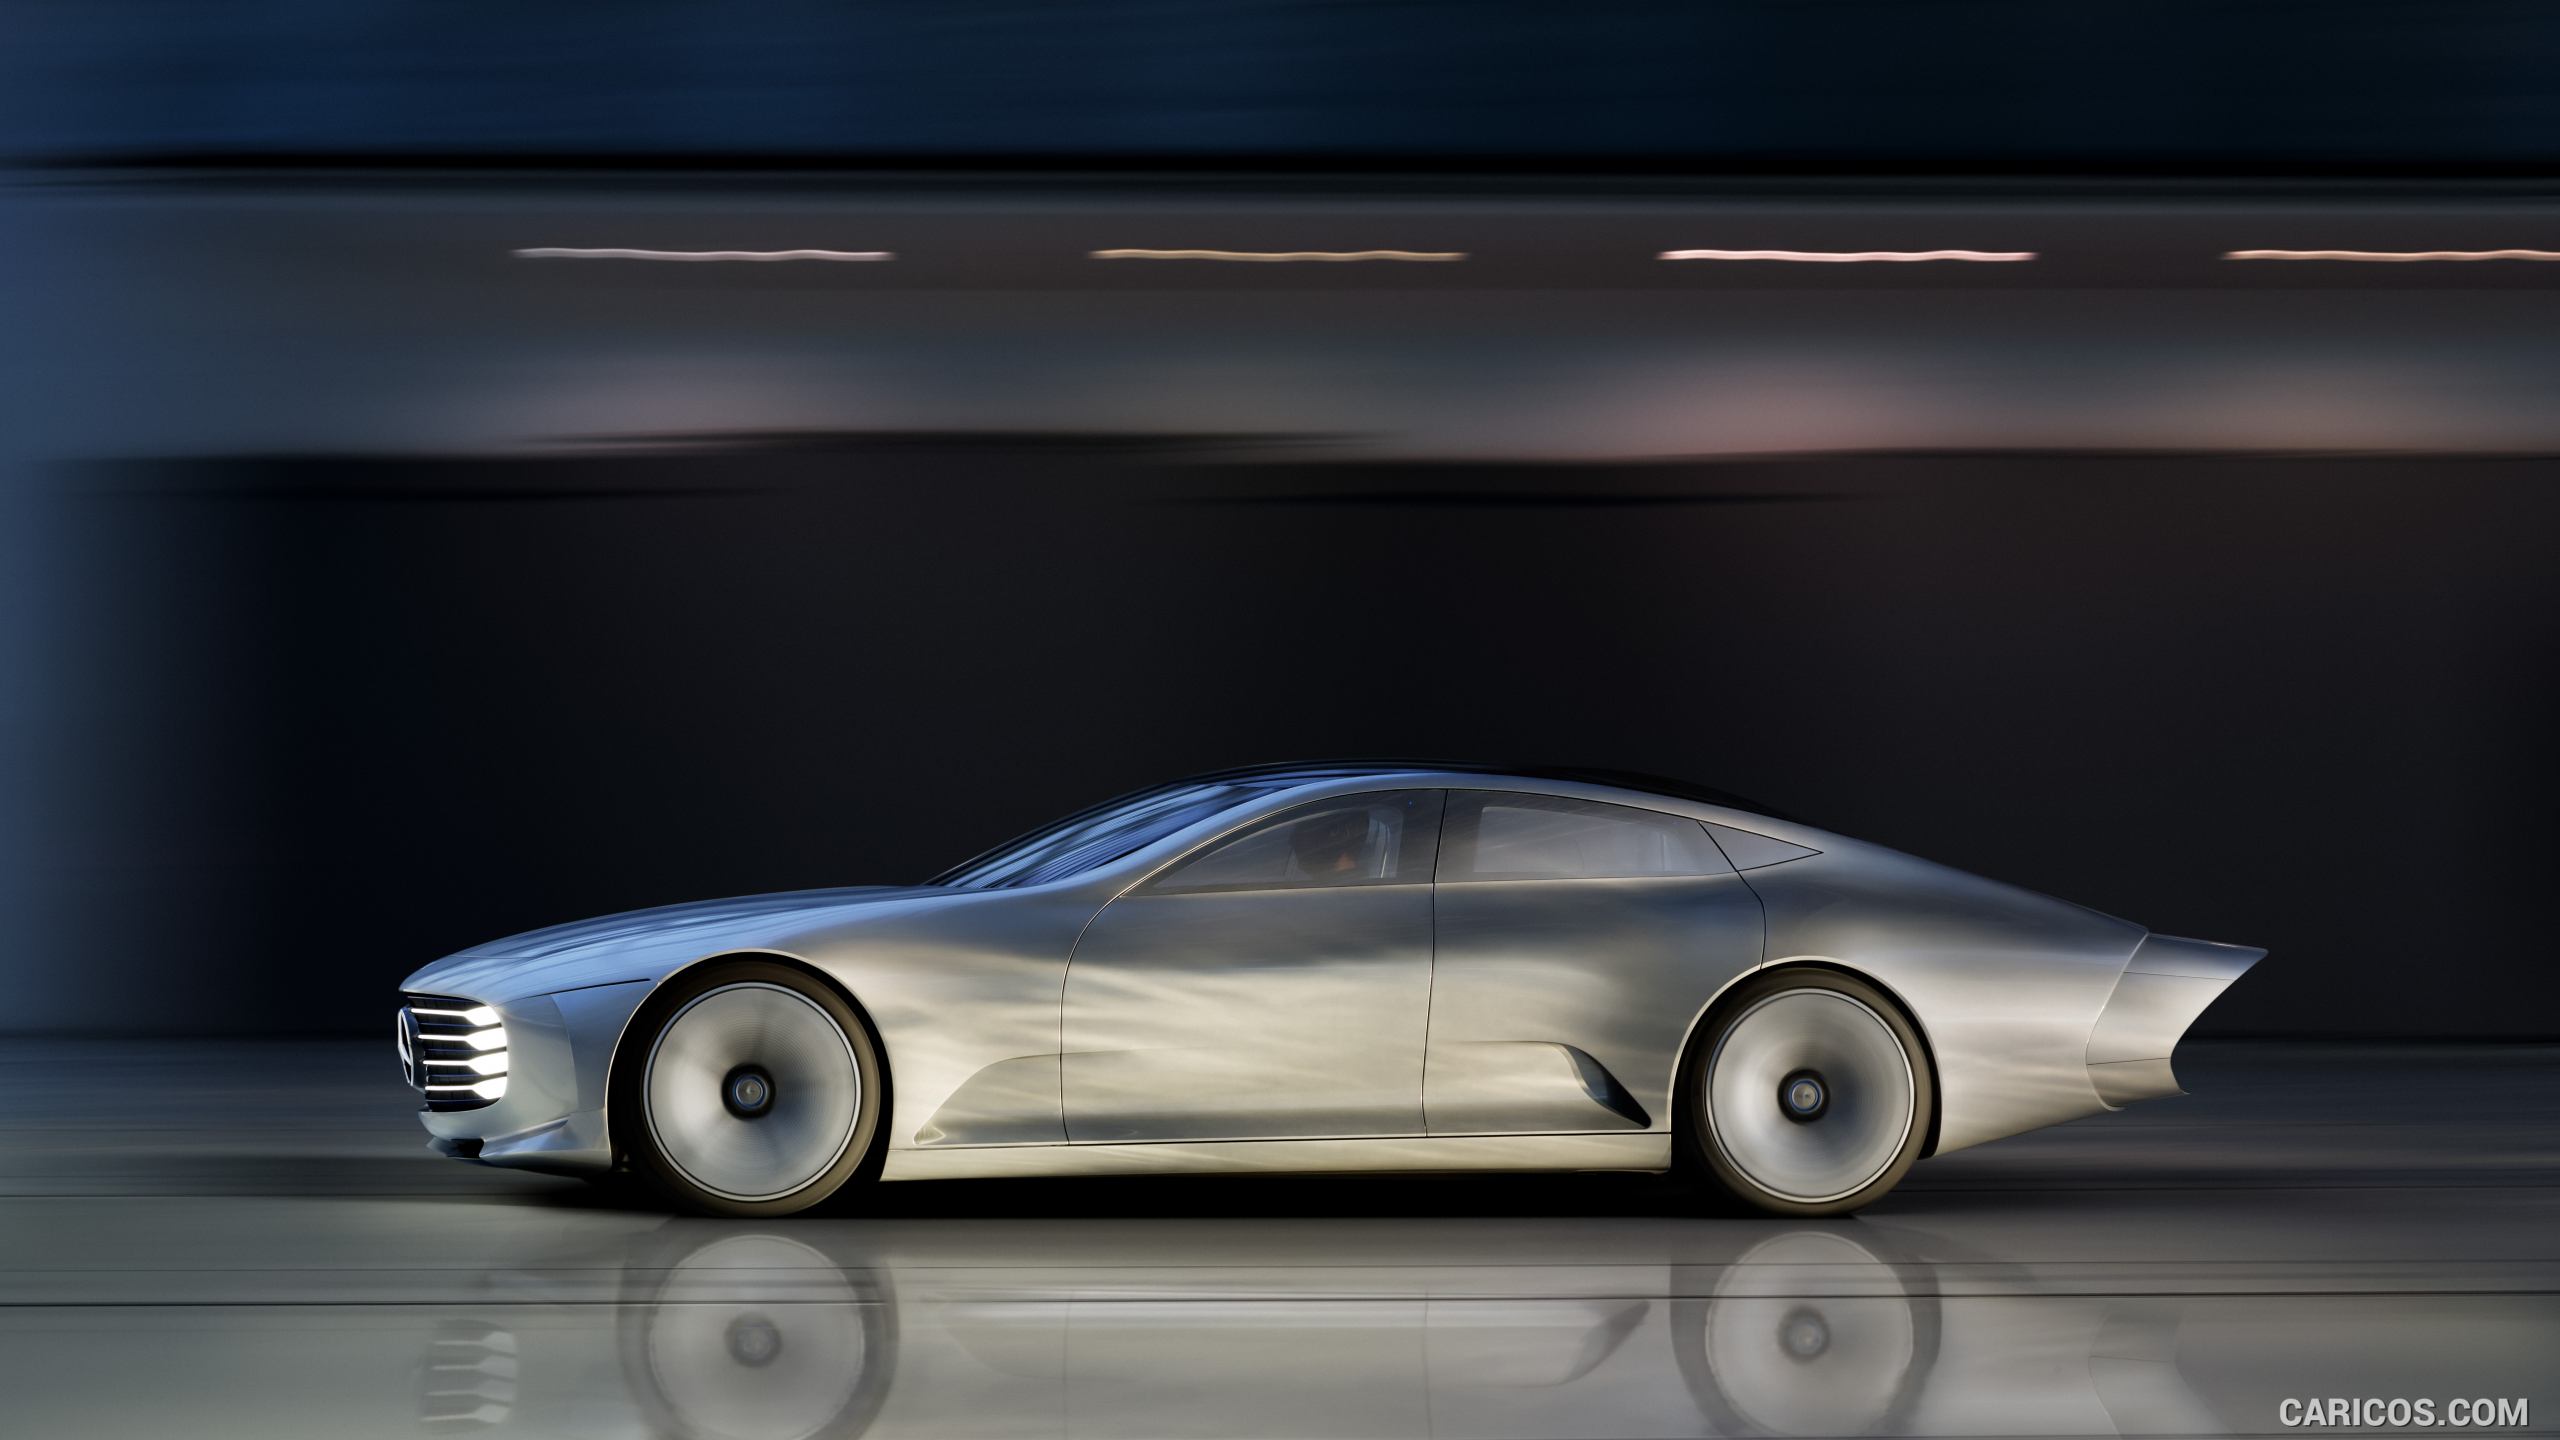 2015 Mercedes-Benz Concept IAA (Intelligent Aerodynamic Automobile) - Side, #20 of 49